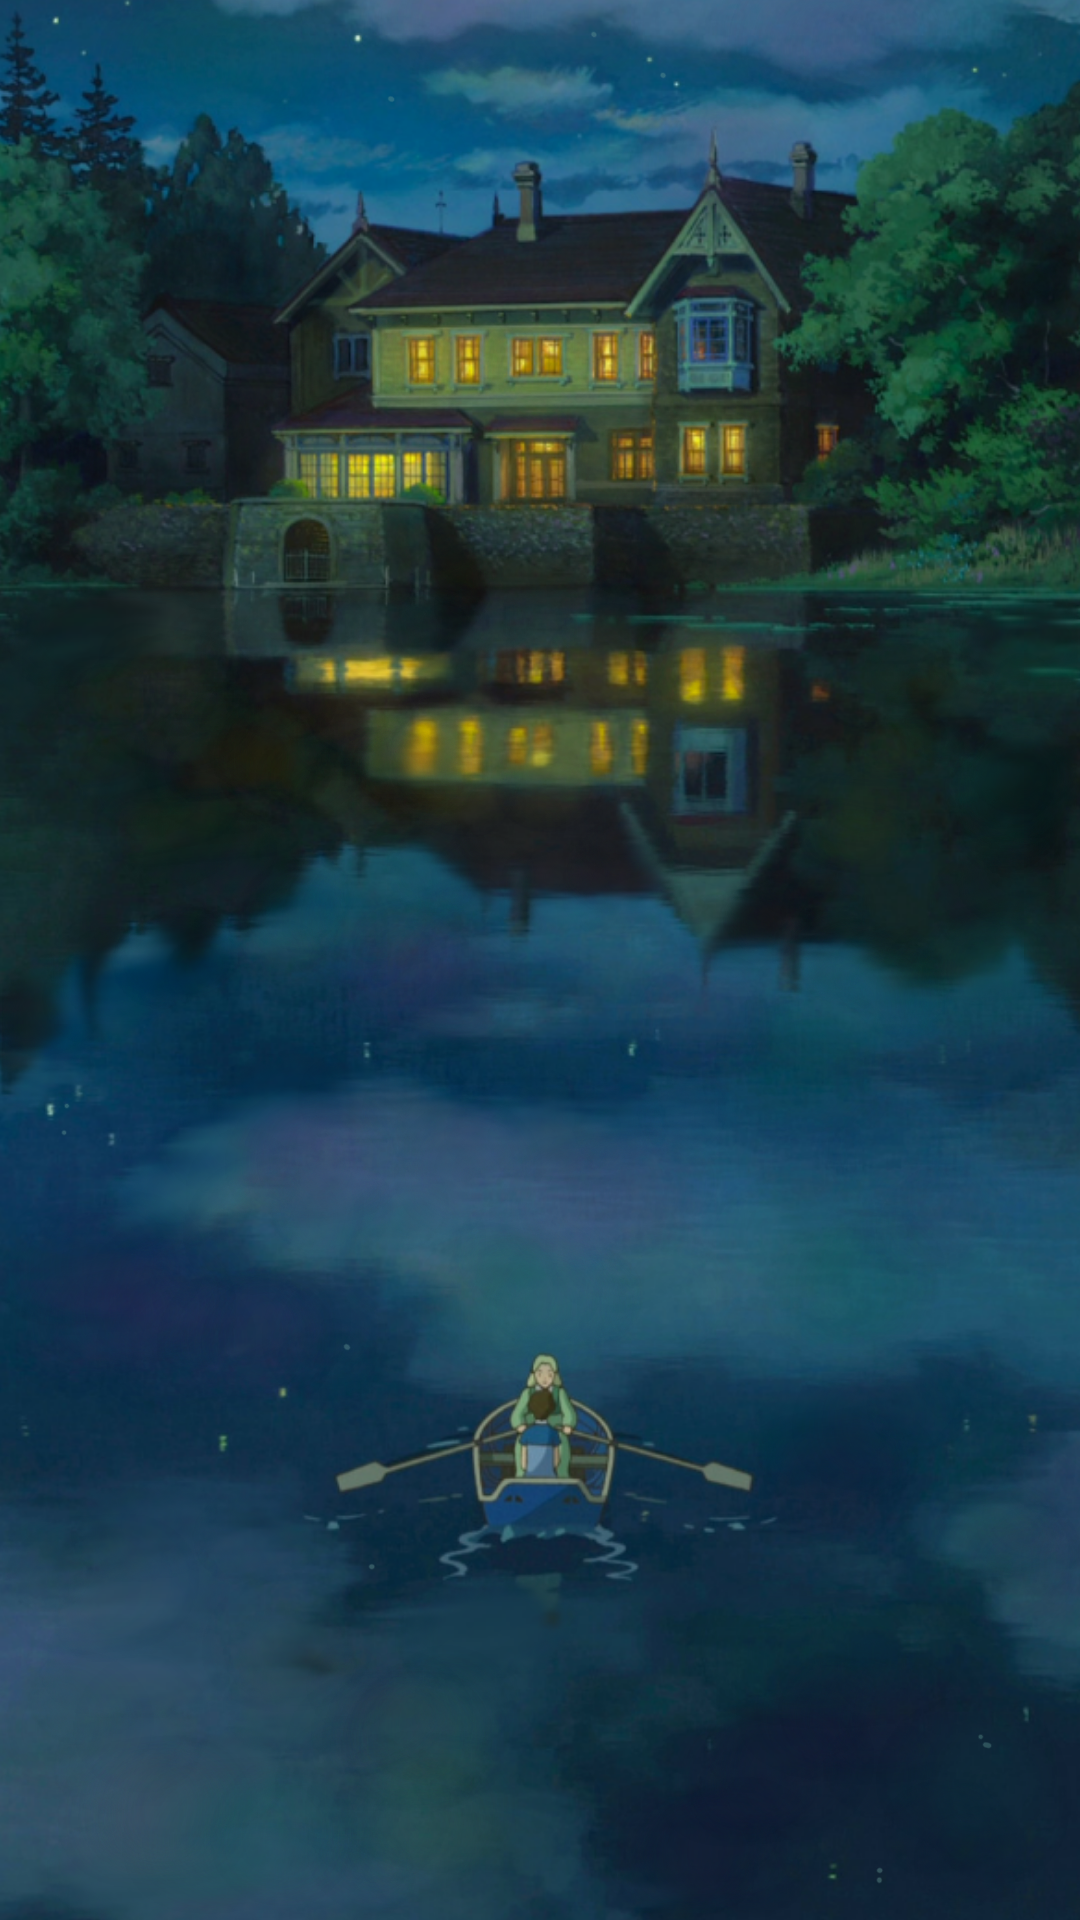 Studio Ghibli Lockscreen